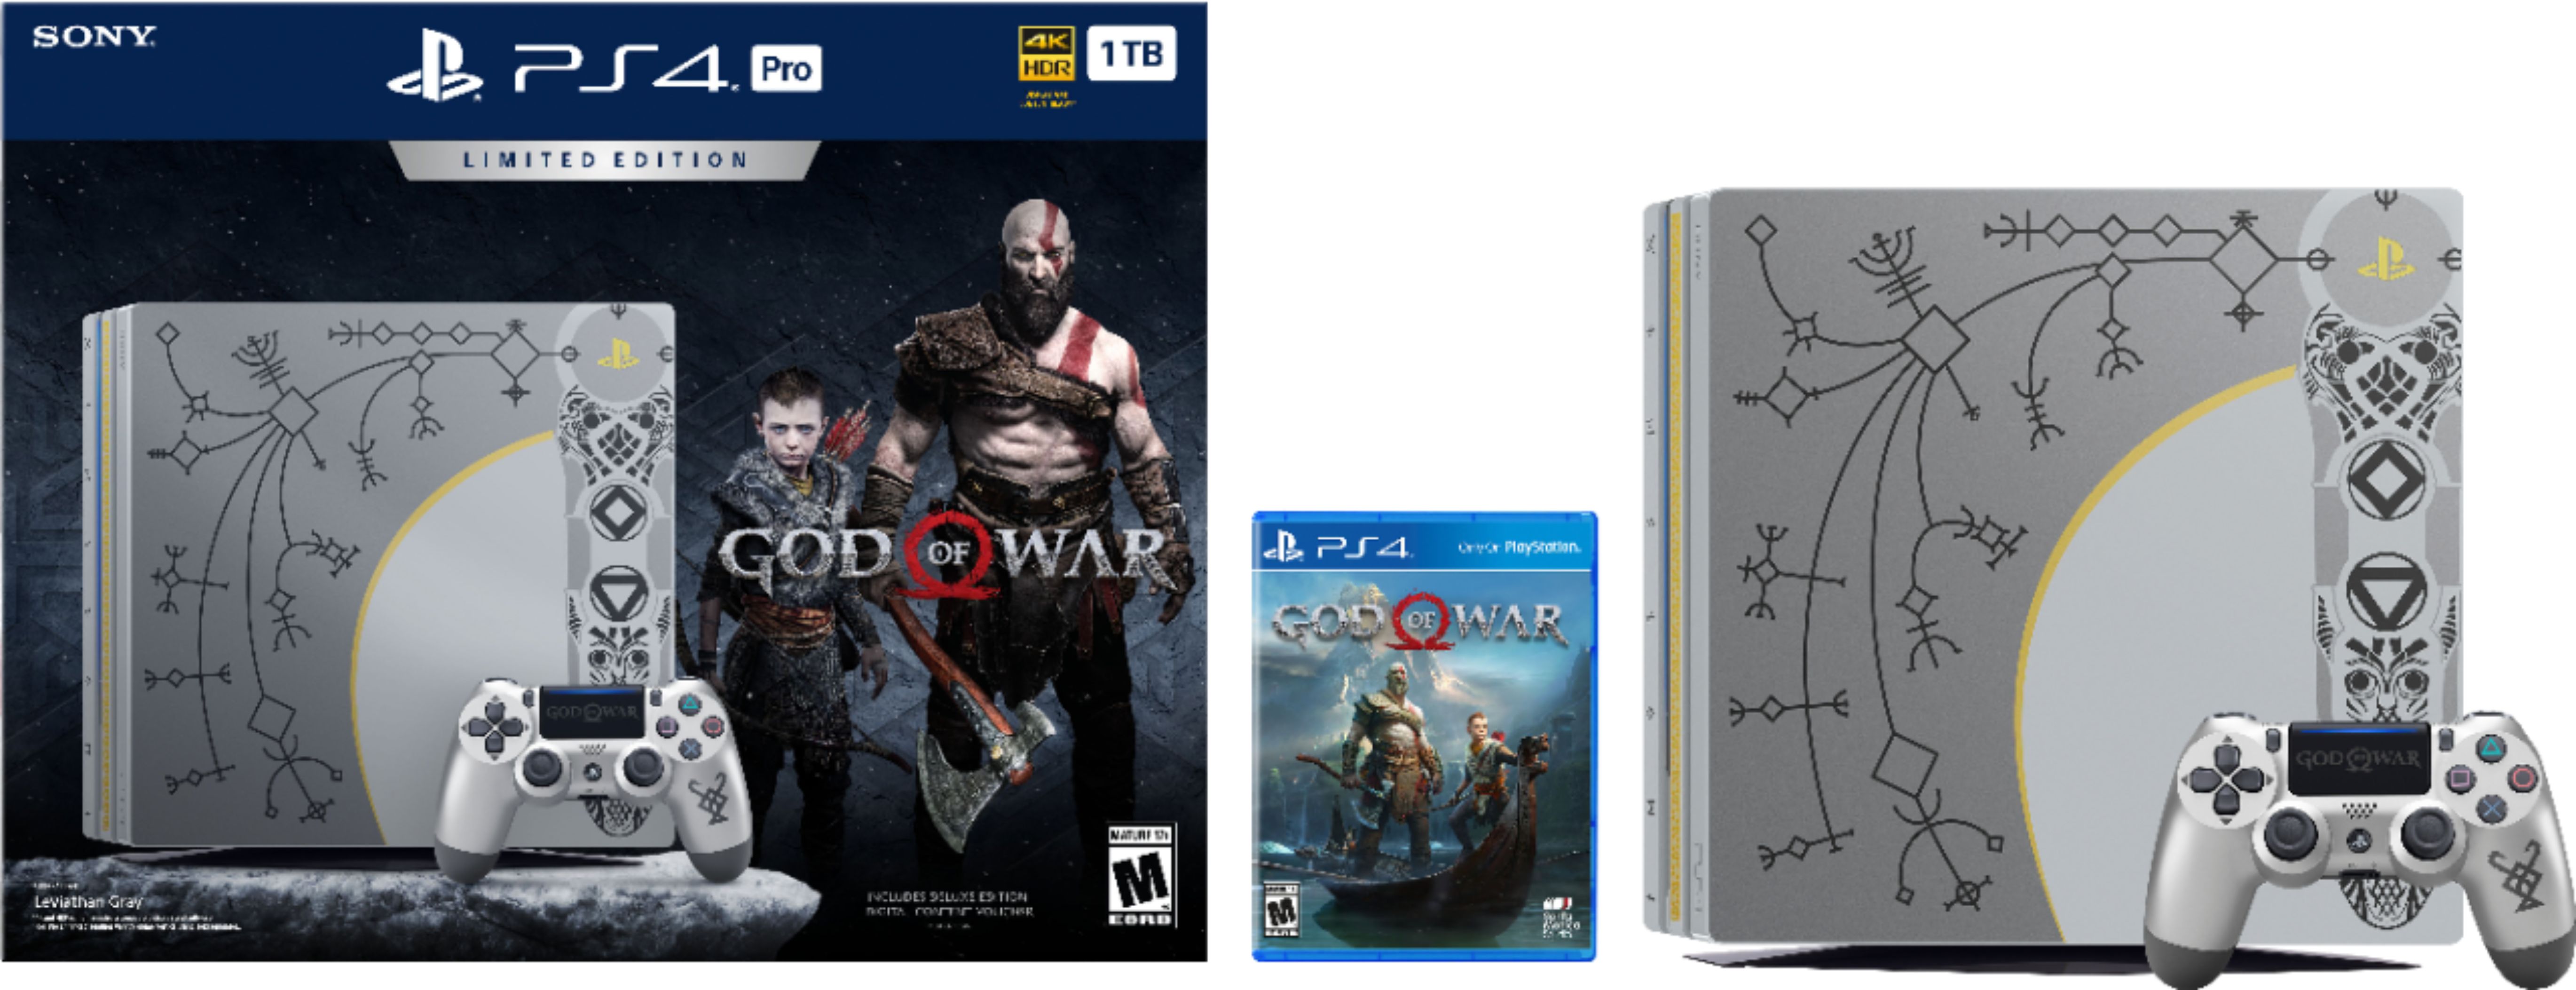 Learner Synes godt om kyst Best Buy: Sony PlayStation 4 Pro 1TB Limited Edition God of War Console  Bundle 3002212